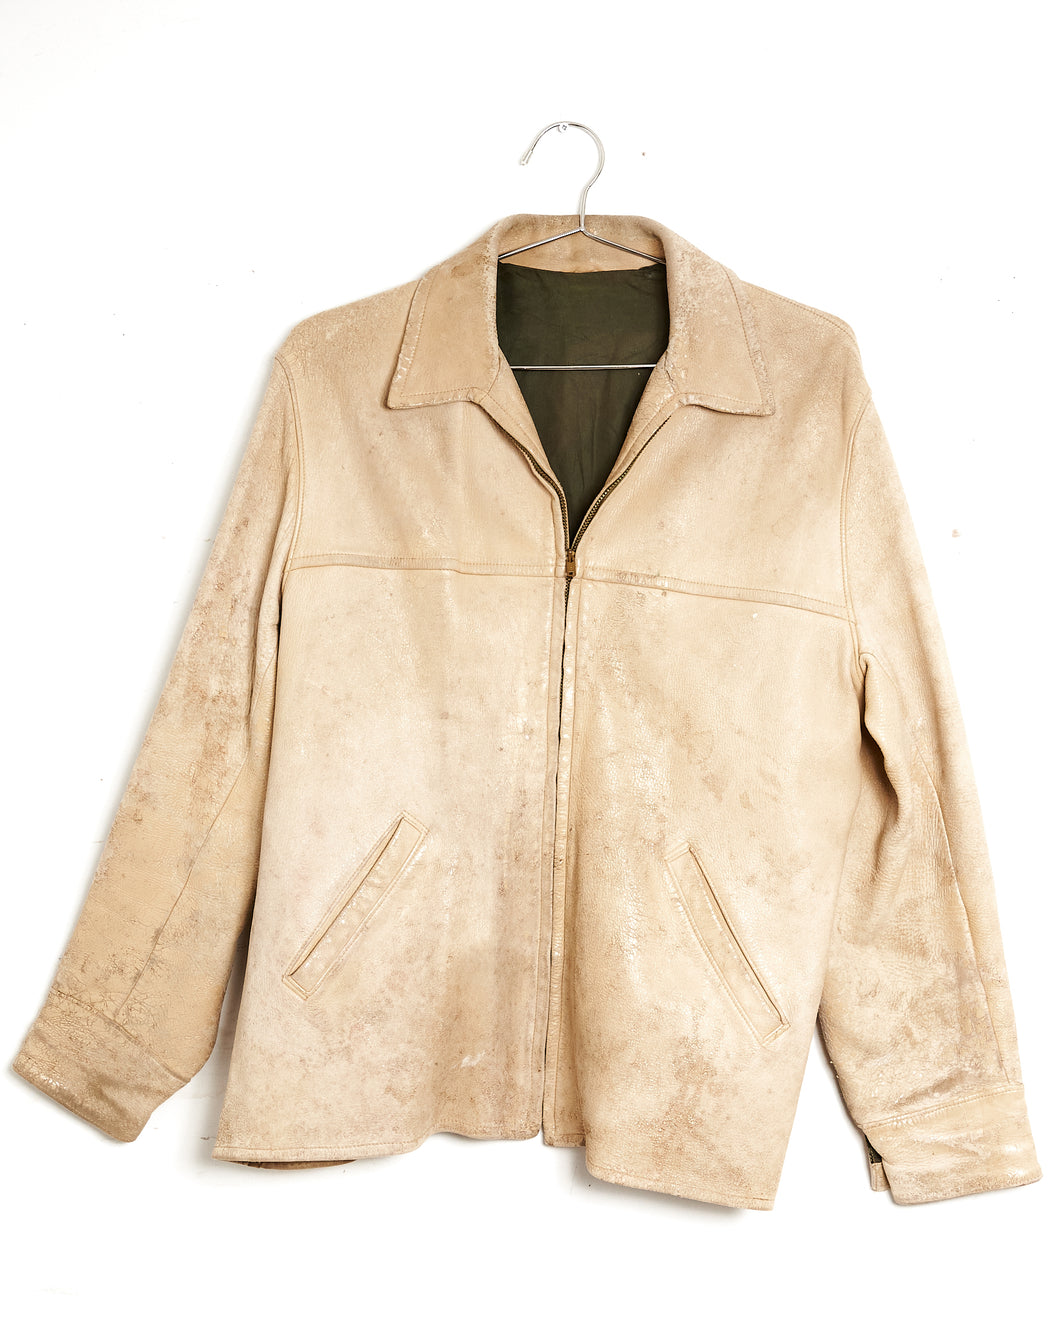 1950s/60s Worn Leather Jacket